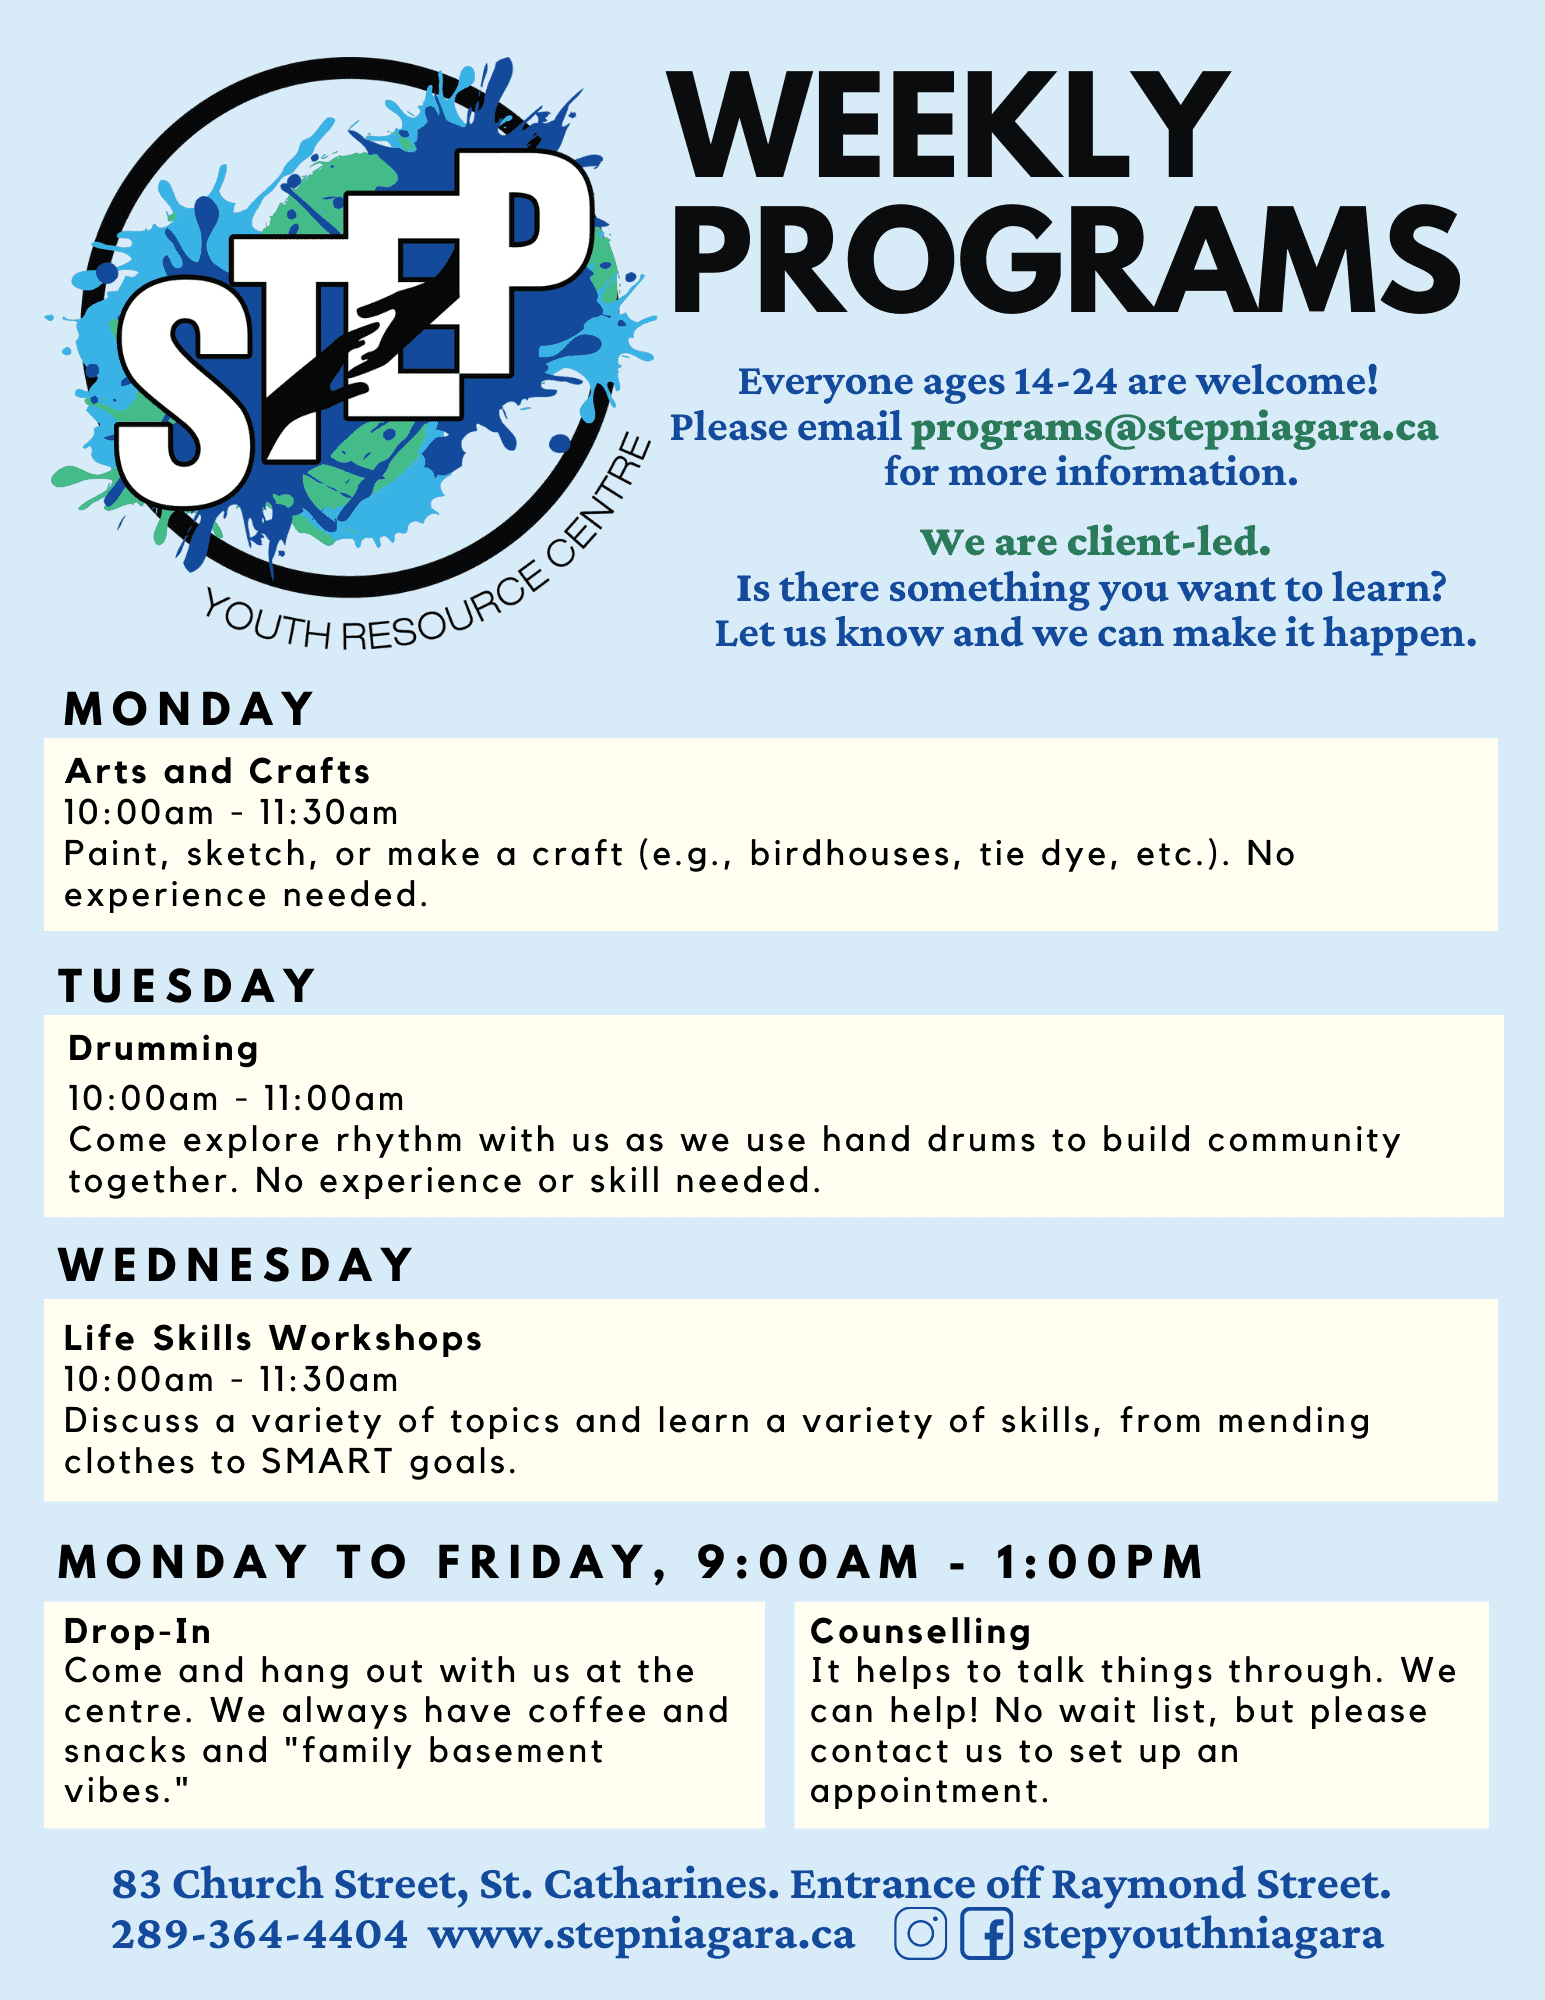 Updated program schedule